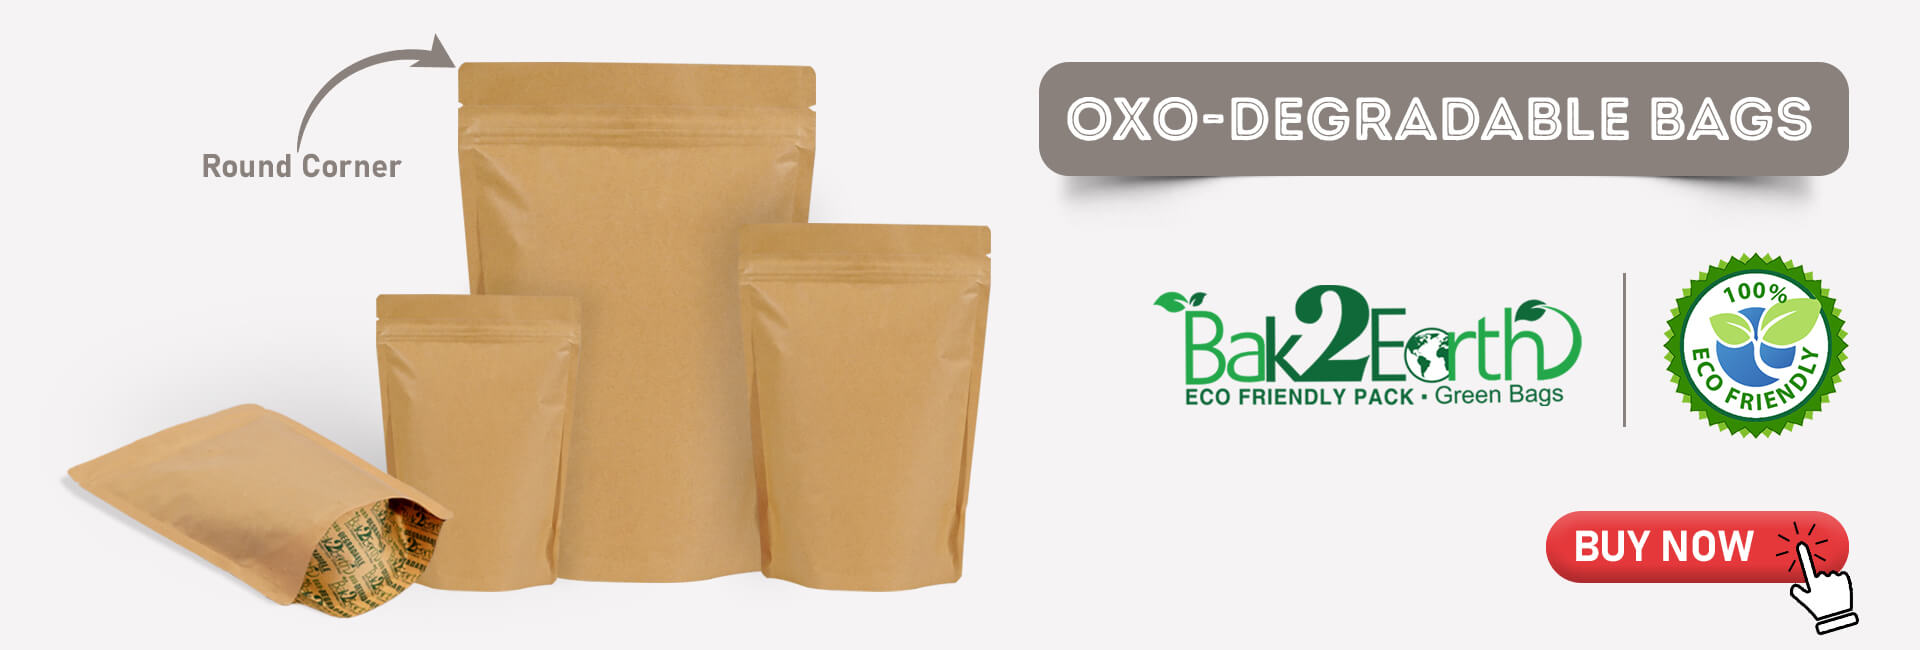 Oxo Degradable Bags